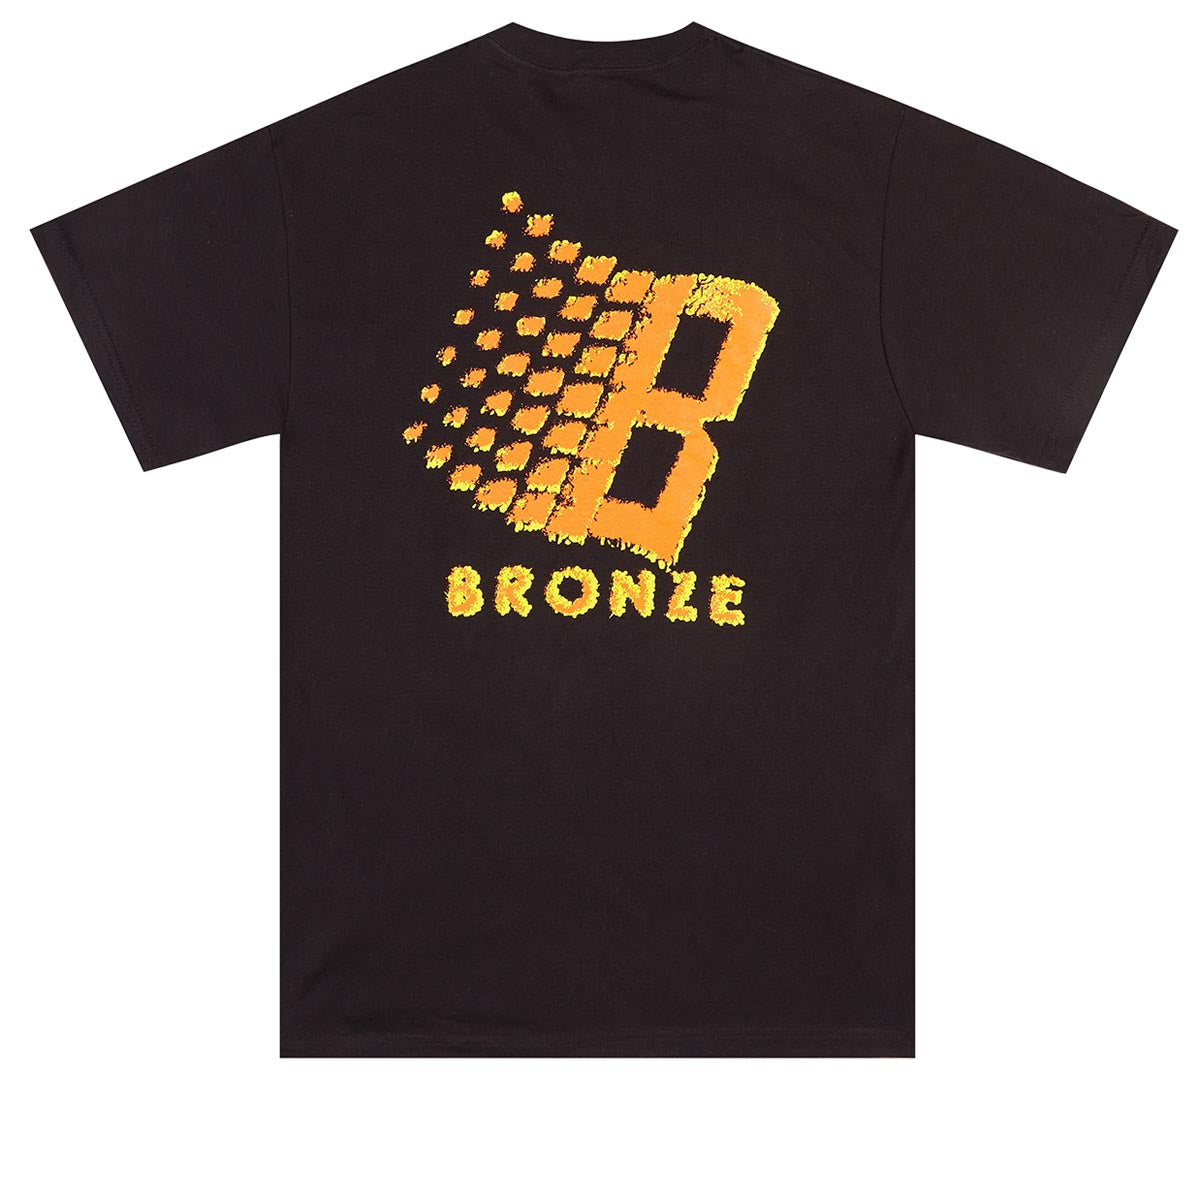 Bronze 56k B Logo T-Shirt - Black image 1